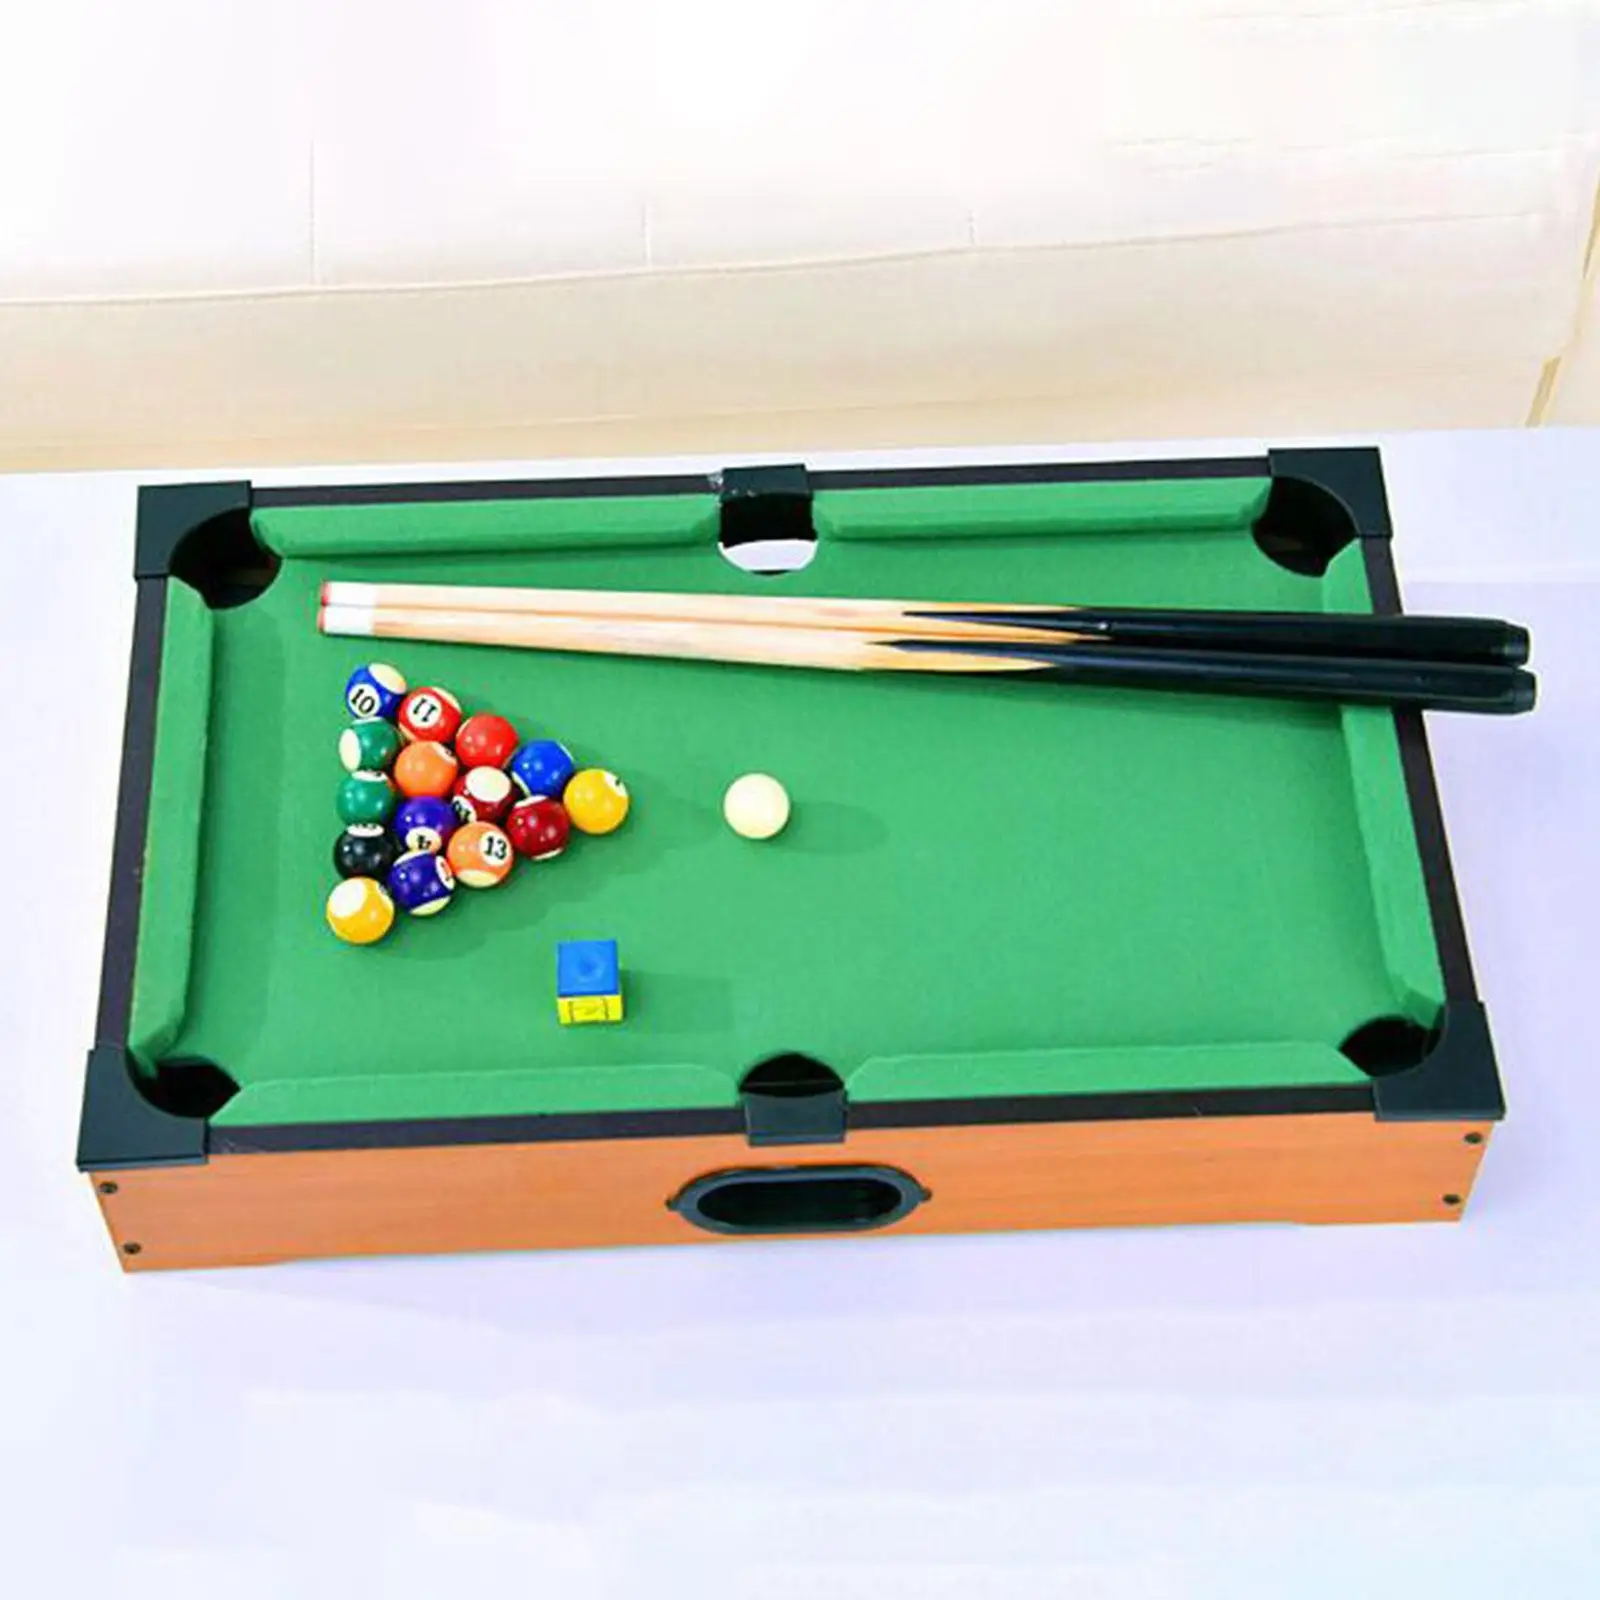 Mini Table Pool Set Eye Hand Coordination Playset Cues Miniature Billiard Game for Desktop Living Room Office Game Room Playroom